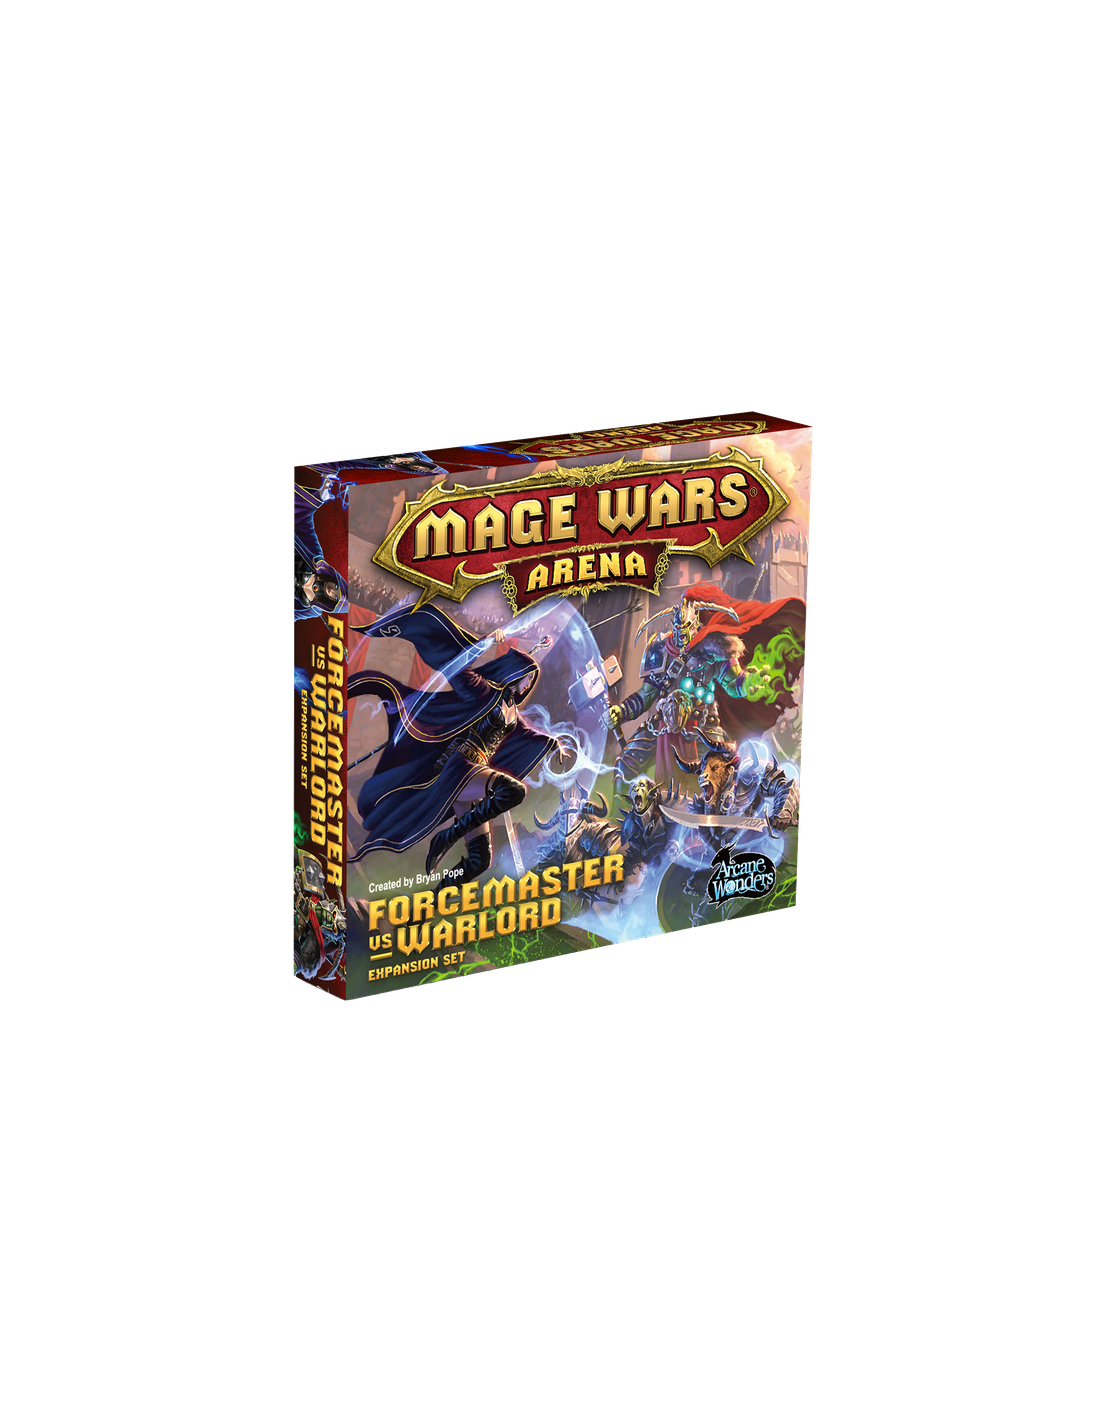 Mage Wars Arena - Forcemaster vs Warlord